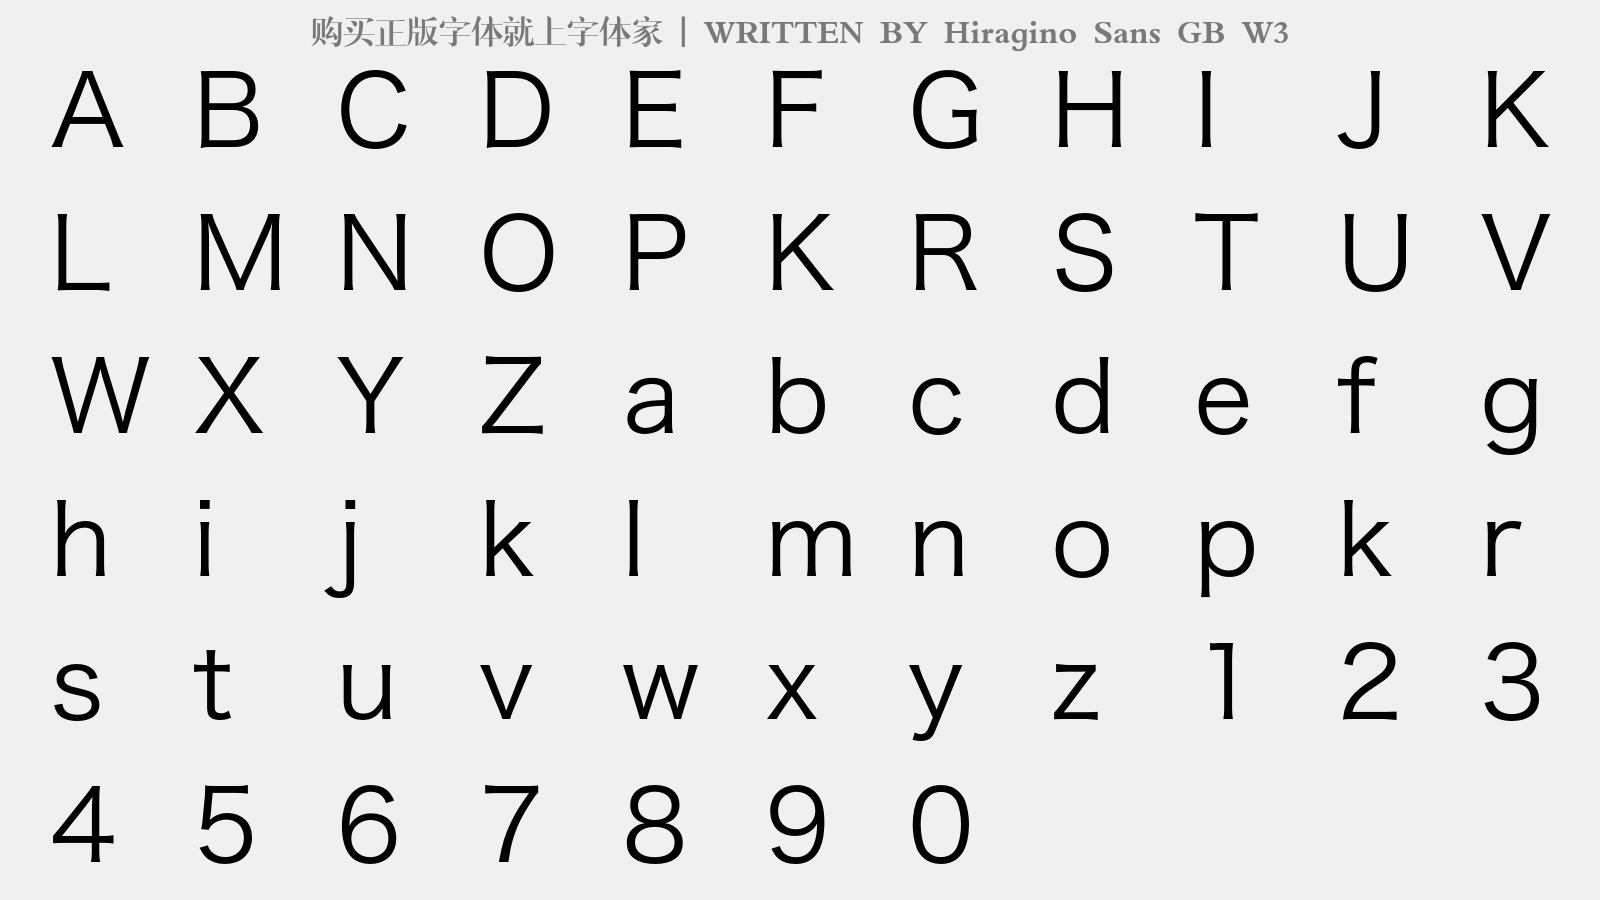 Hiragino Sans GB W3 - 大写字母/小写字母/数字